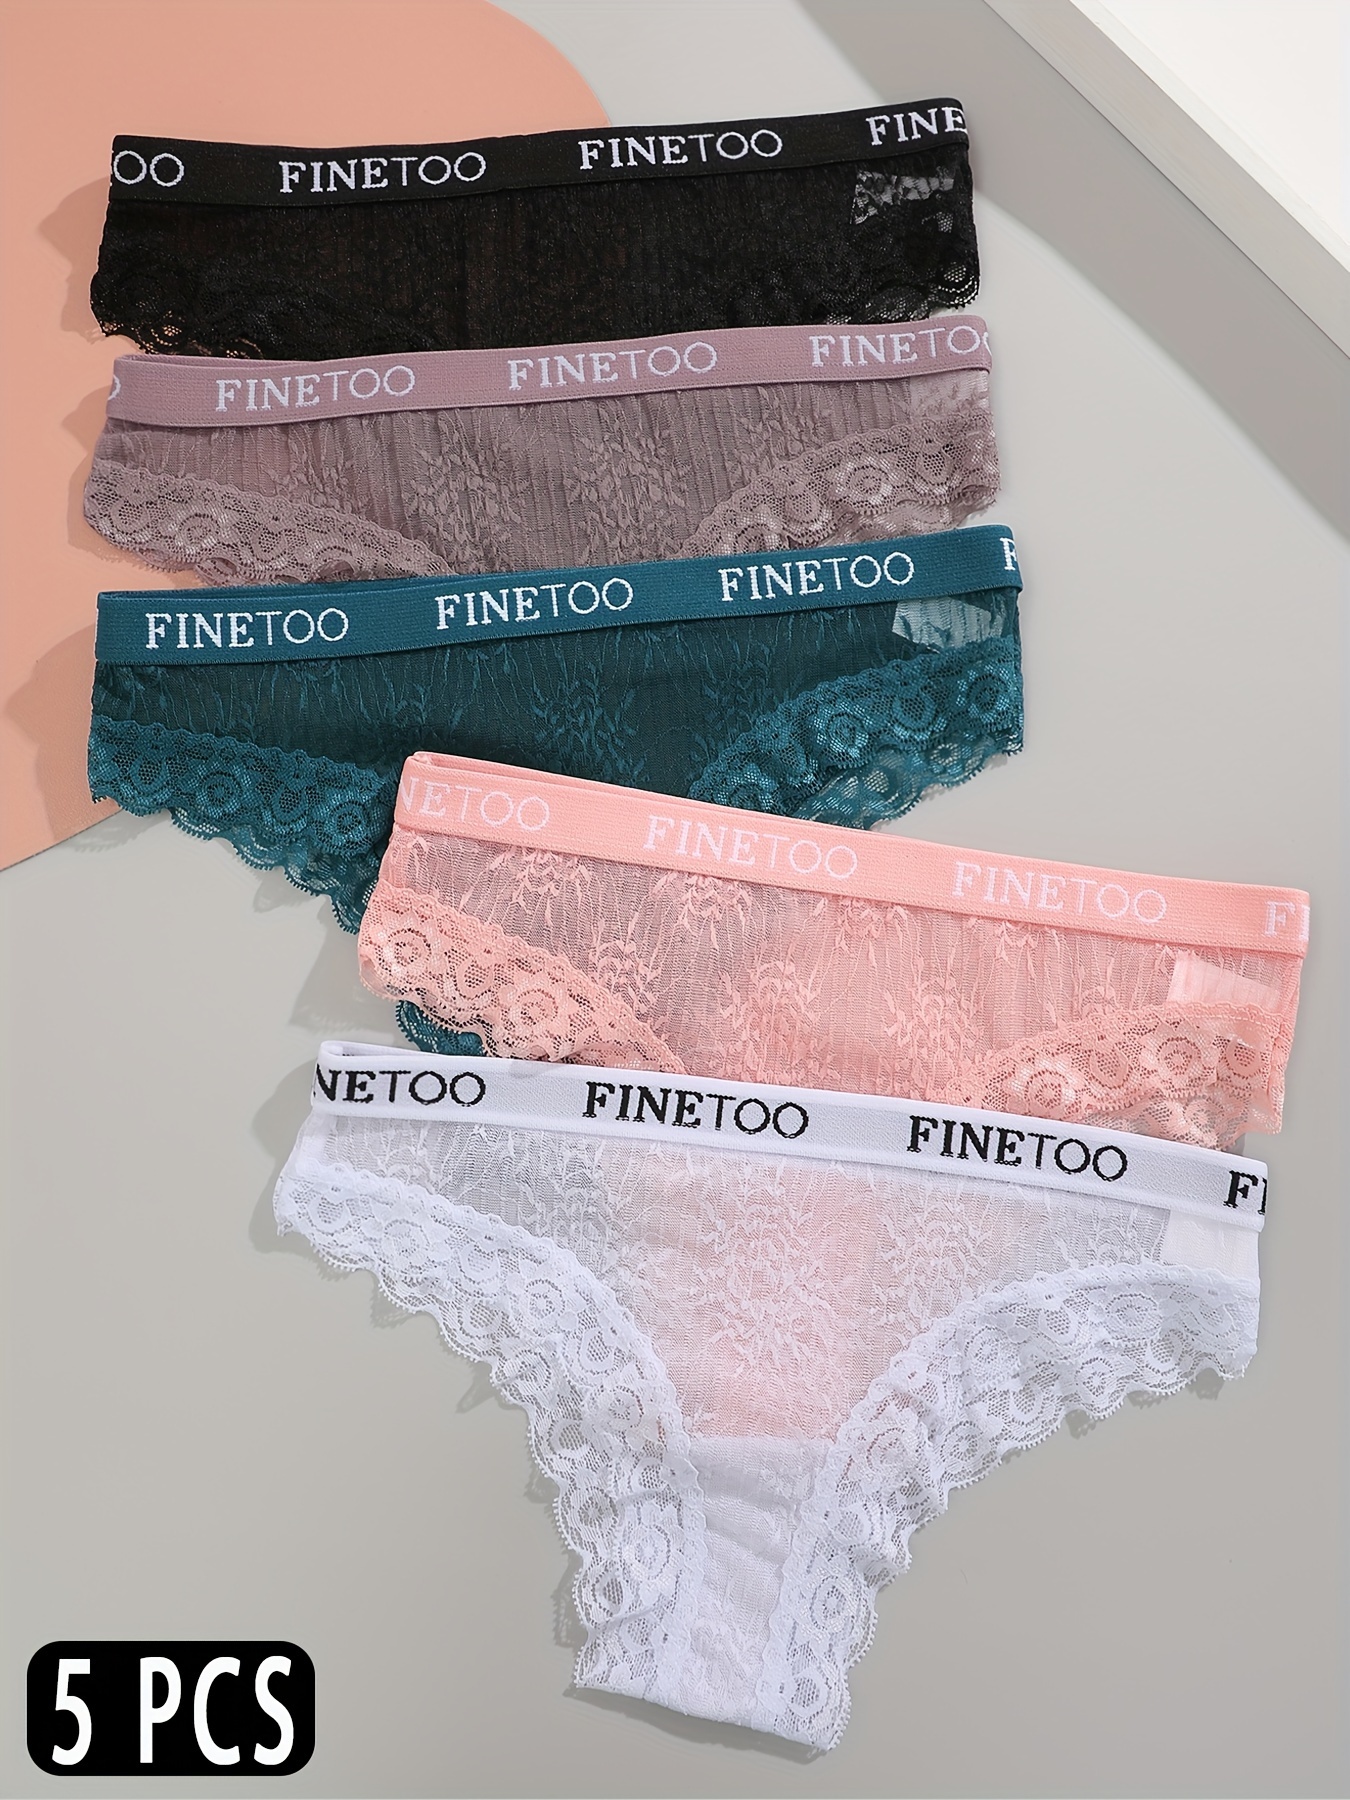 5pcs Floral Lace Boyshort Panties, Thin Semi-Sheer Wave Trim Panties,  Women's Lingerie & Underwear